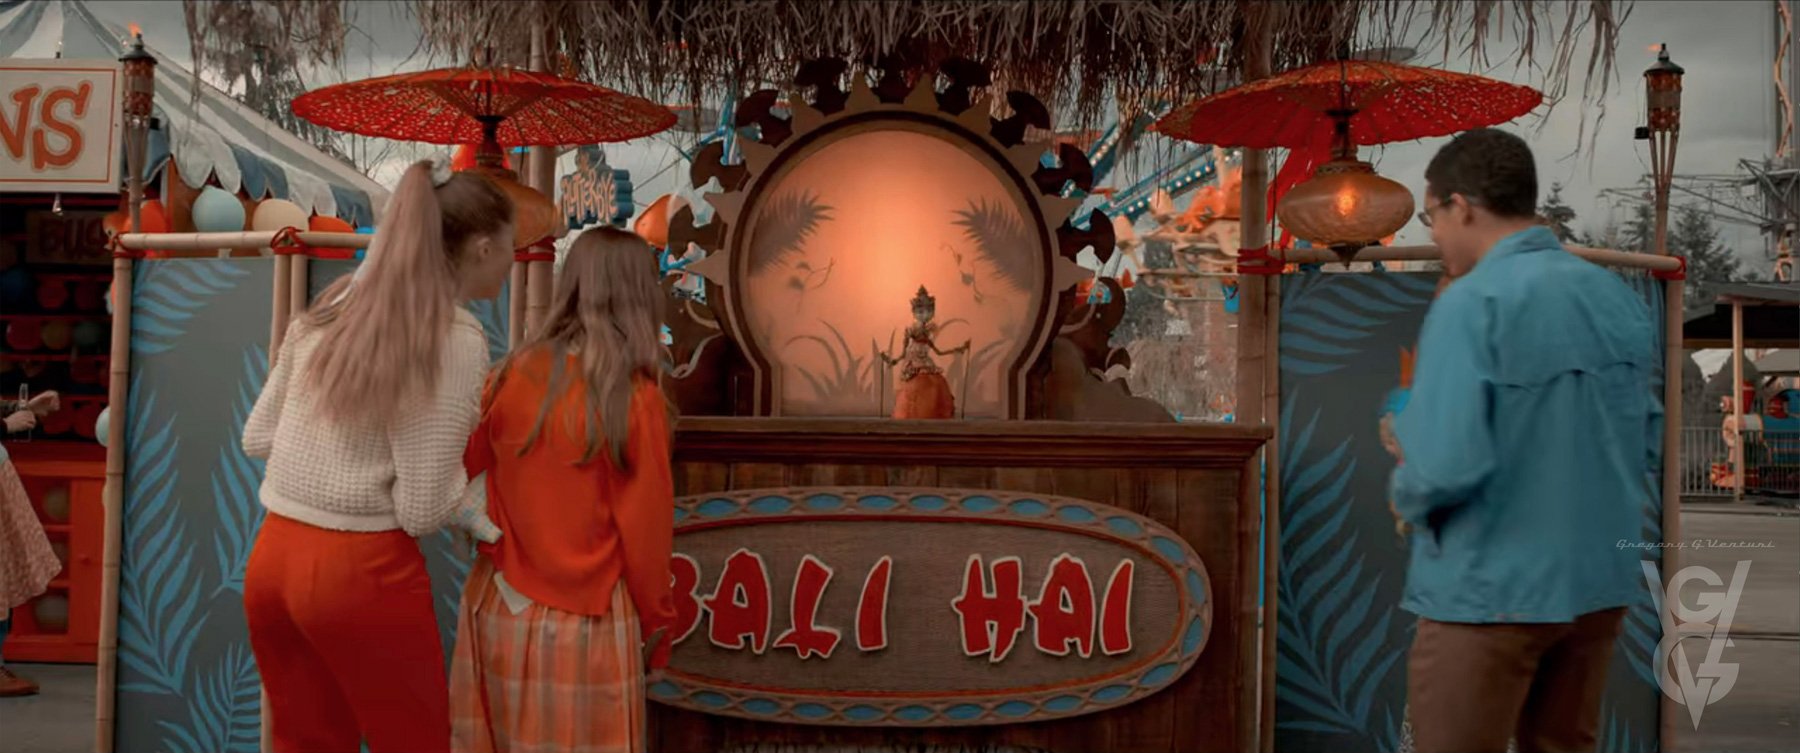 3A Lost Ollie 'Dreamland Amusement Park' Zozo's Ball Toss Booth Location Install Screen Still